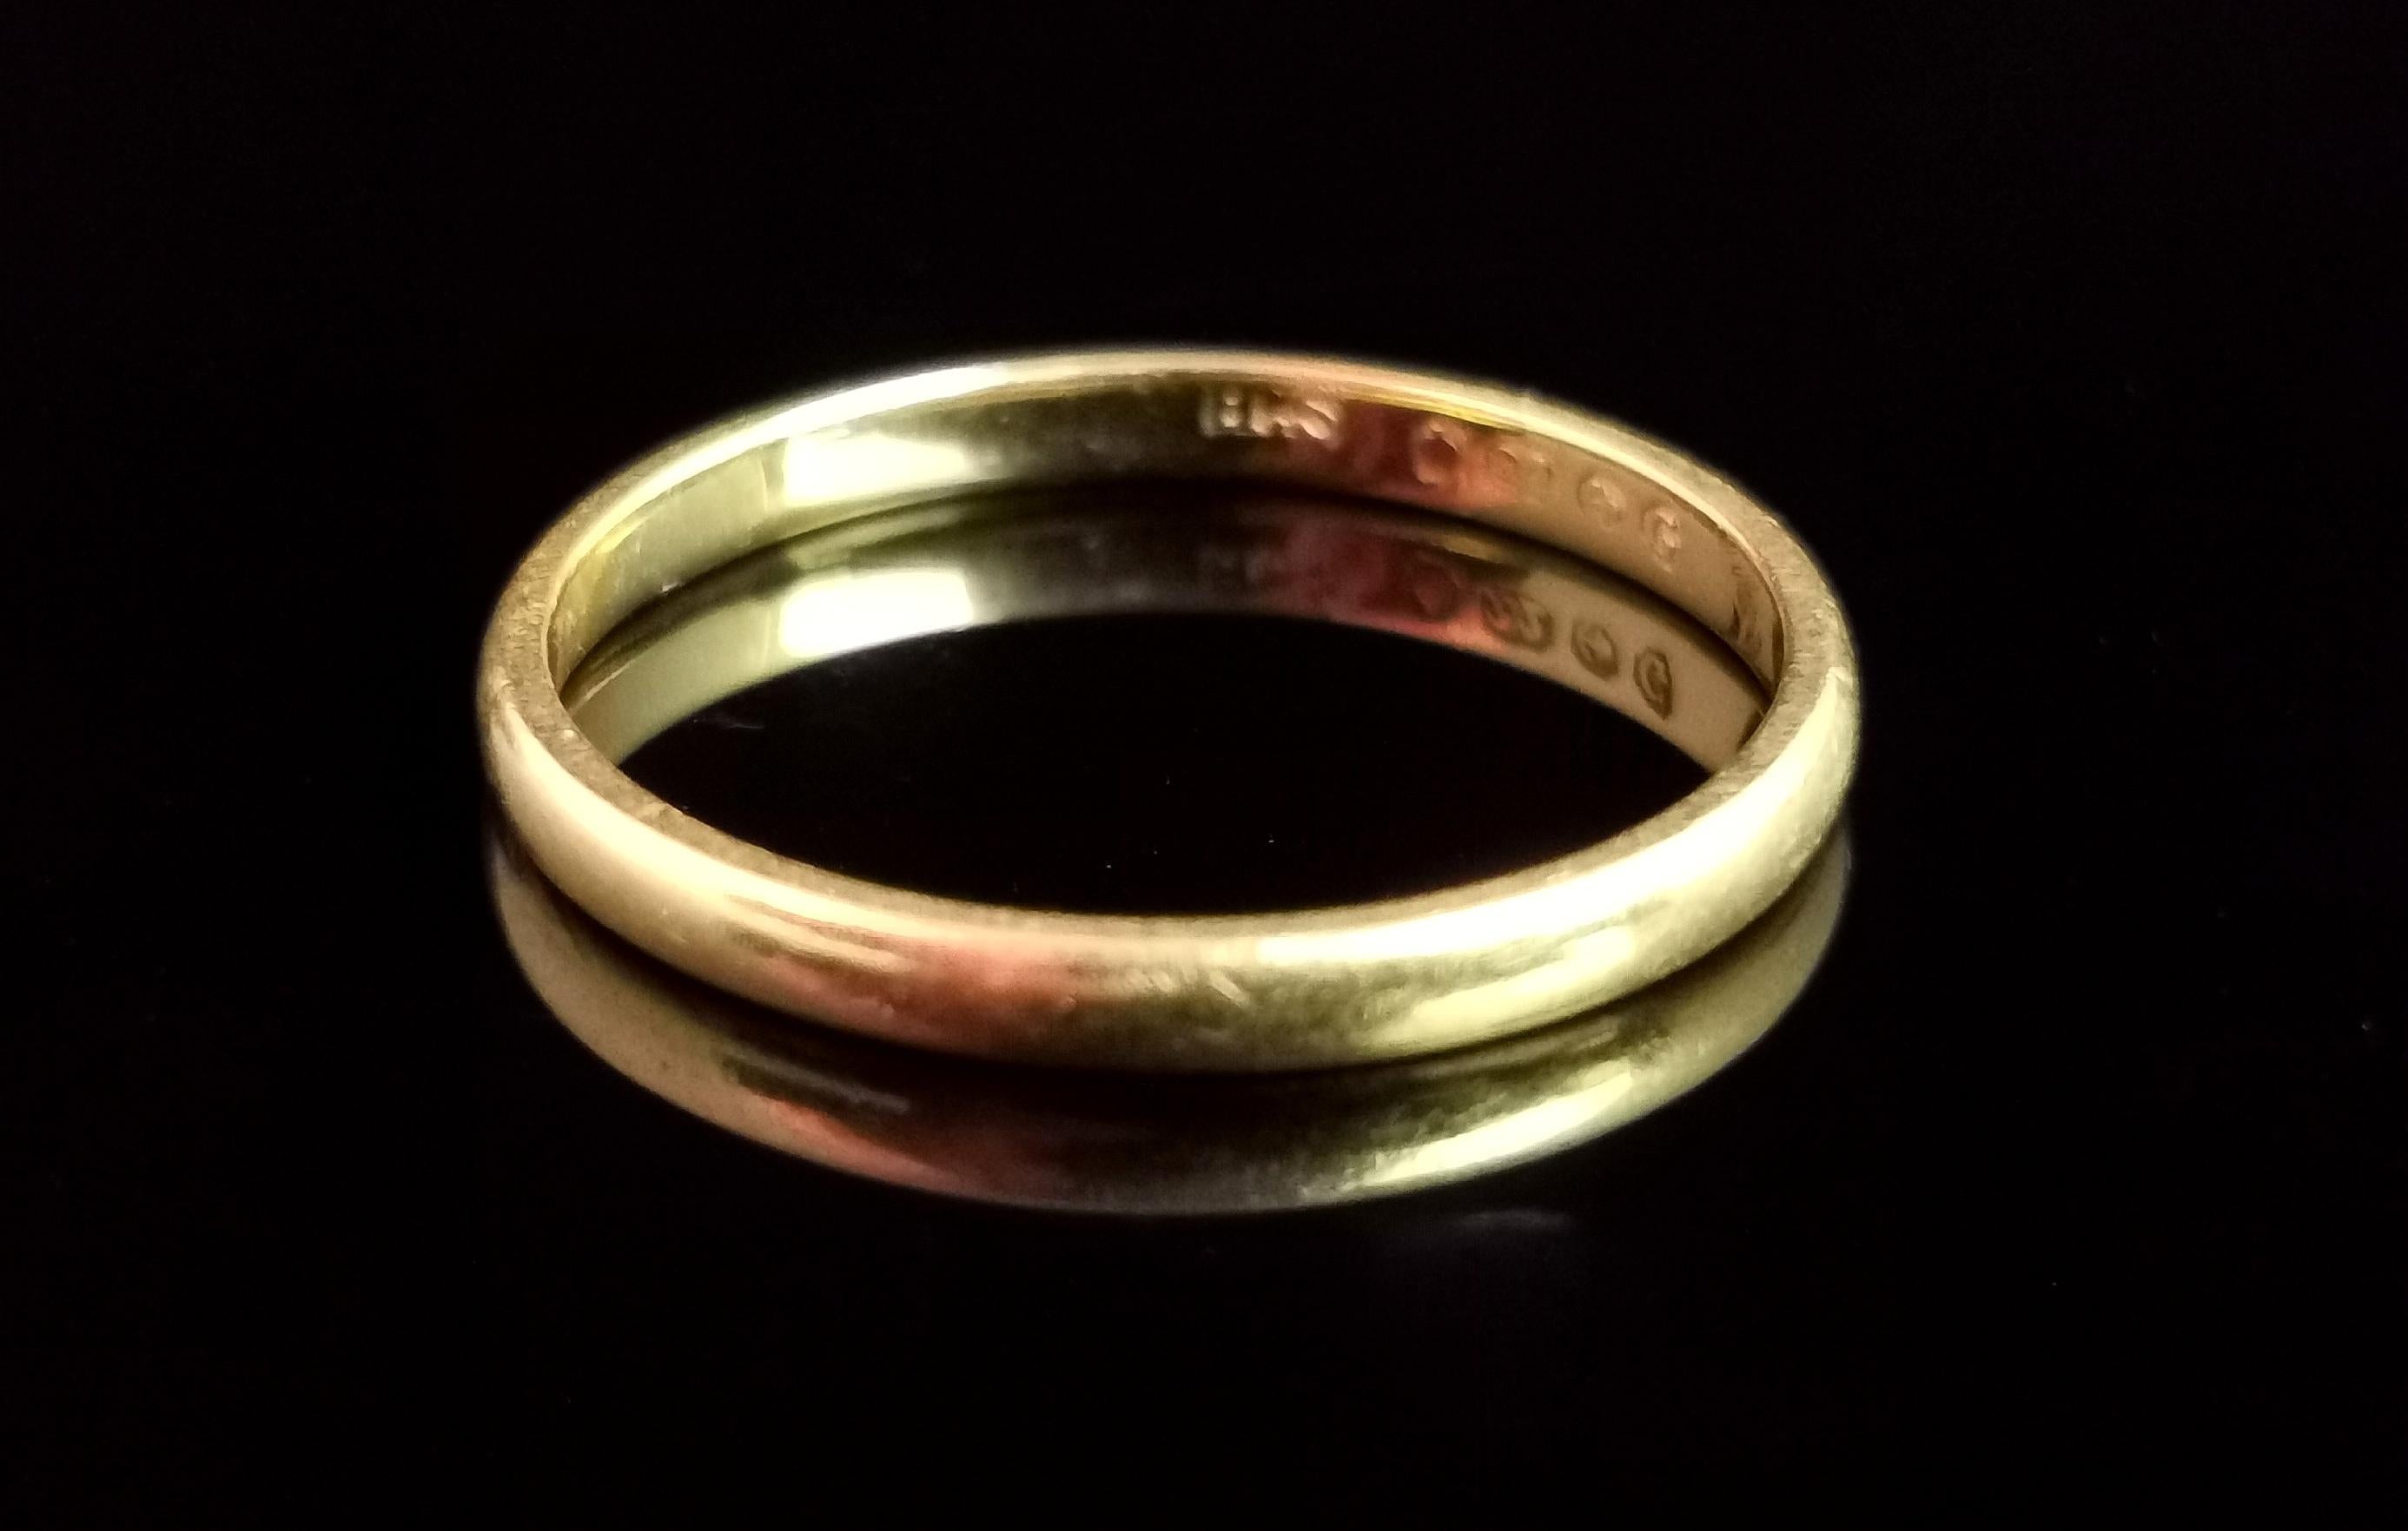 22k gold ring band